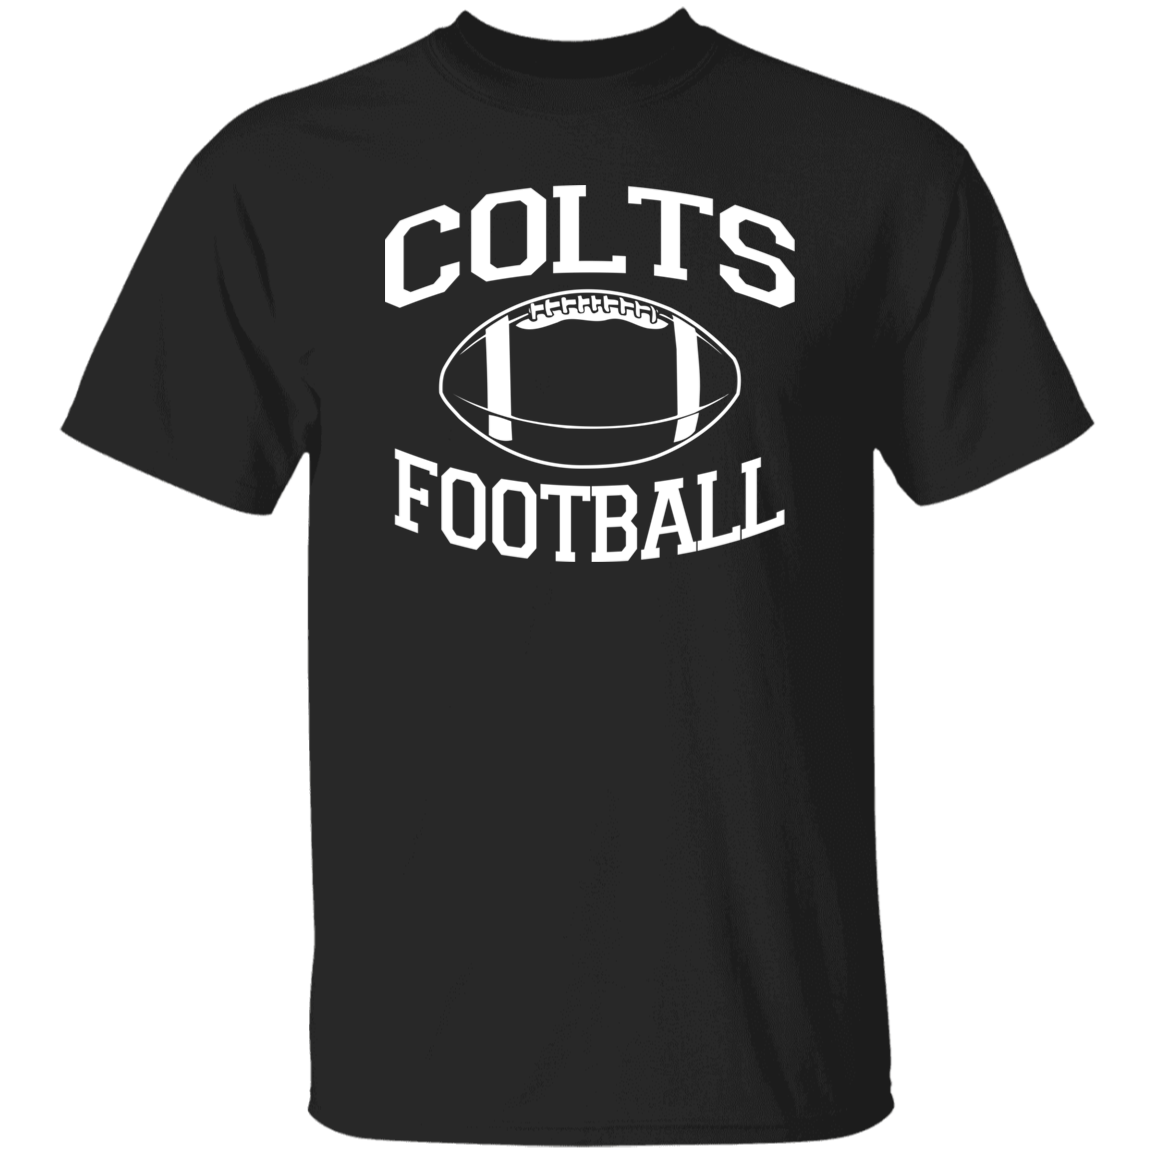 Colts Football White Print T-Shirt